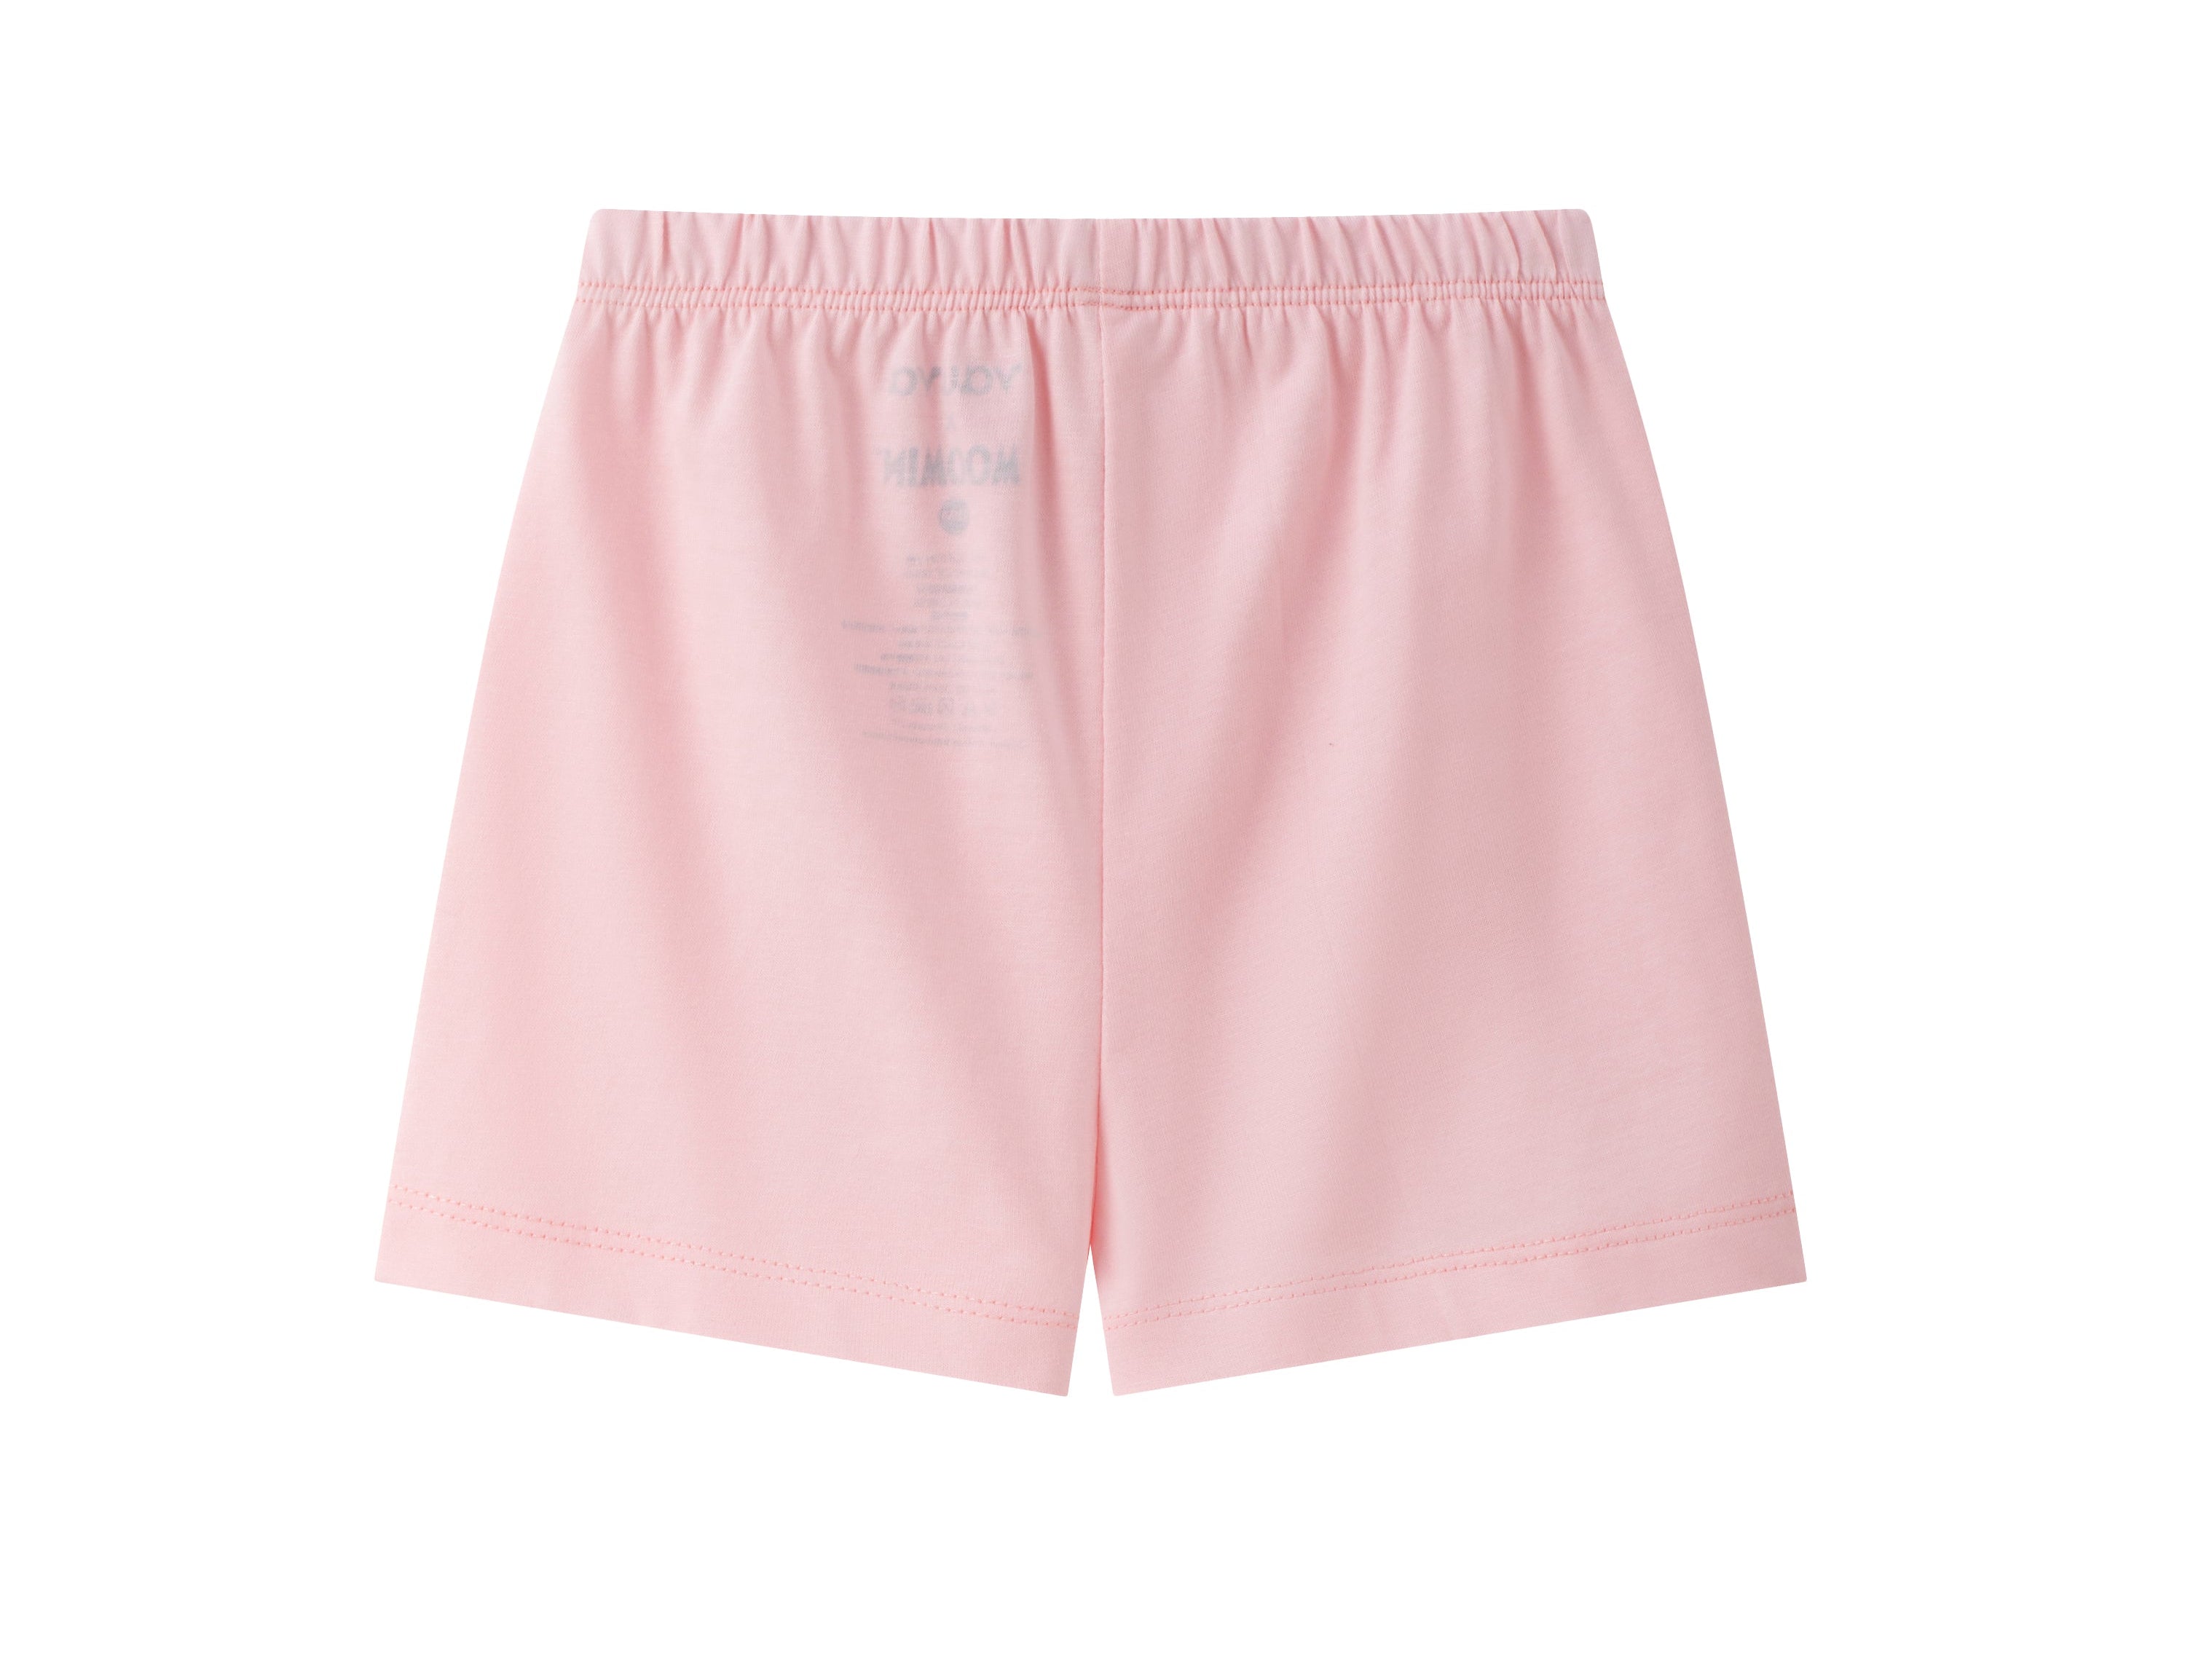 Vauva x Moomin - Baby Girls Short Sleeves Tee Set (Pink)  - Product Image 2